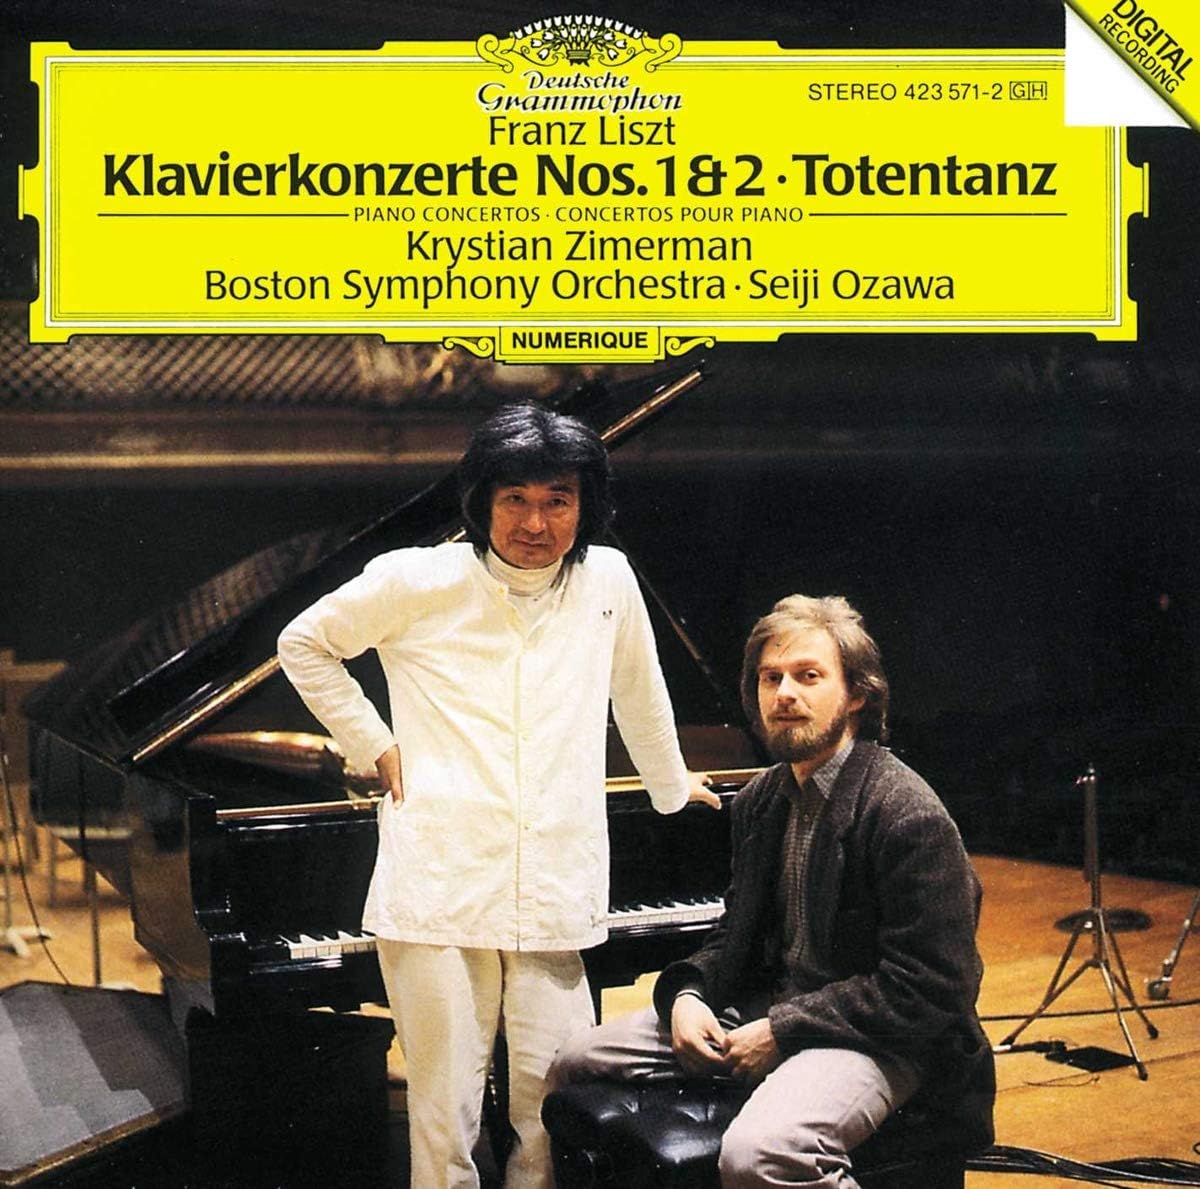 Franz Liszt: Klavierkonzerte Nos 1 & 2, Totentanz | Krystian Zimerman, Boston Symphony Orchestra, Seiji Ozawa